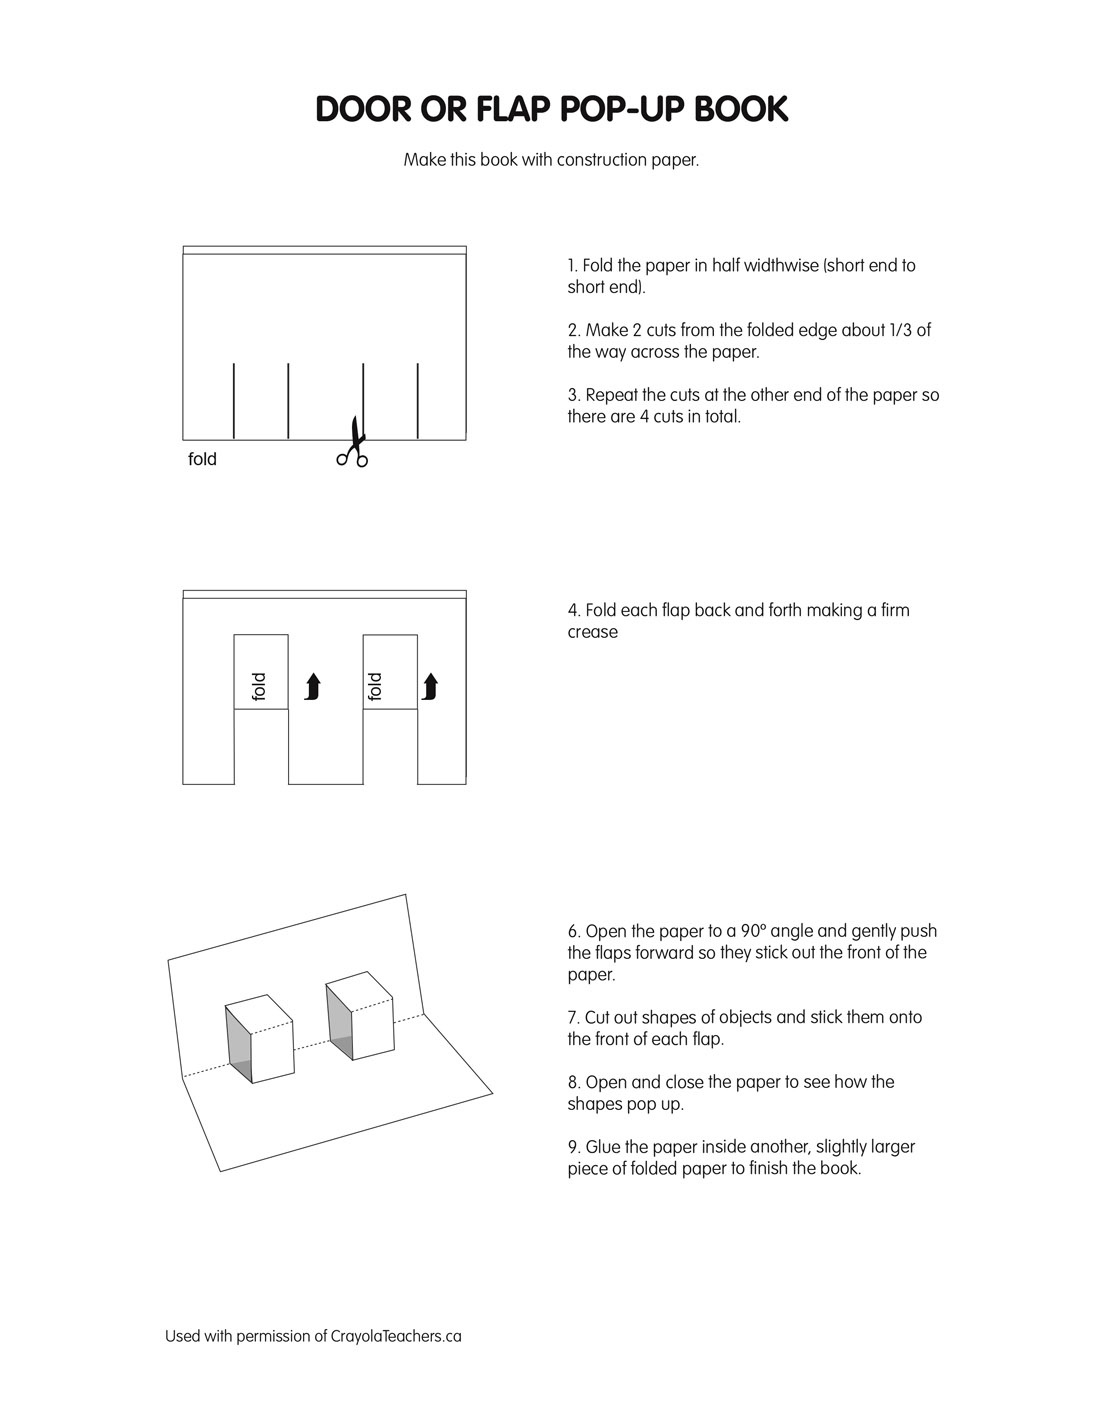 How to Make a Door Booklet